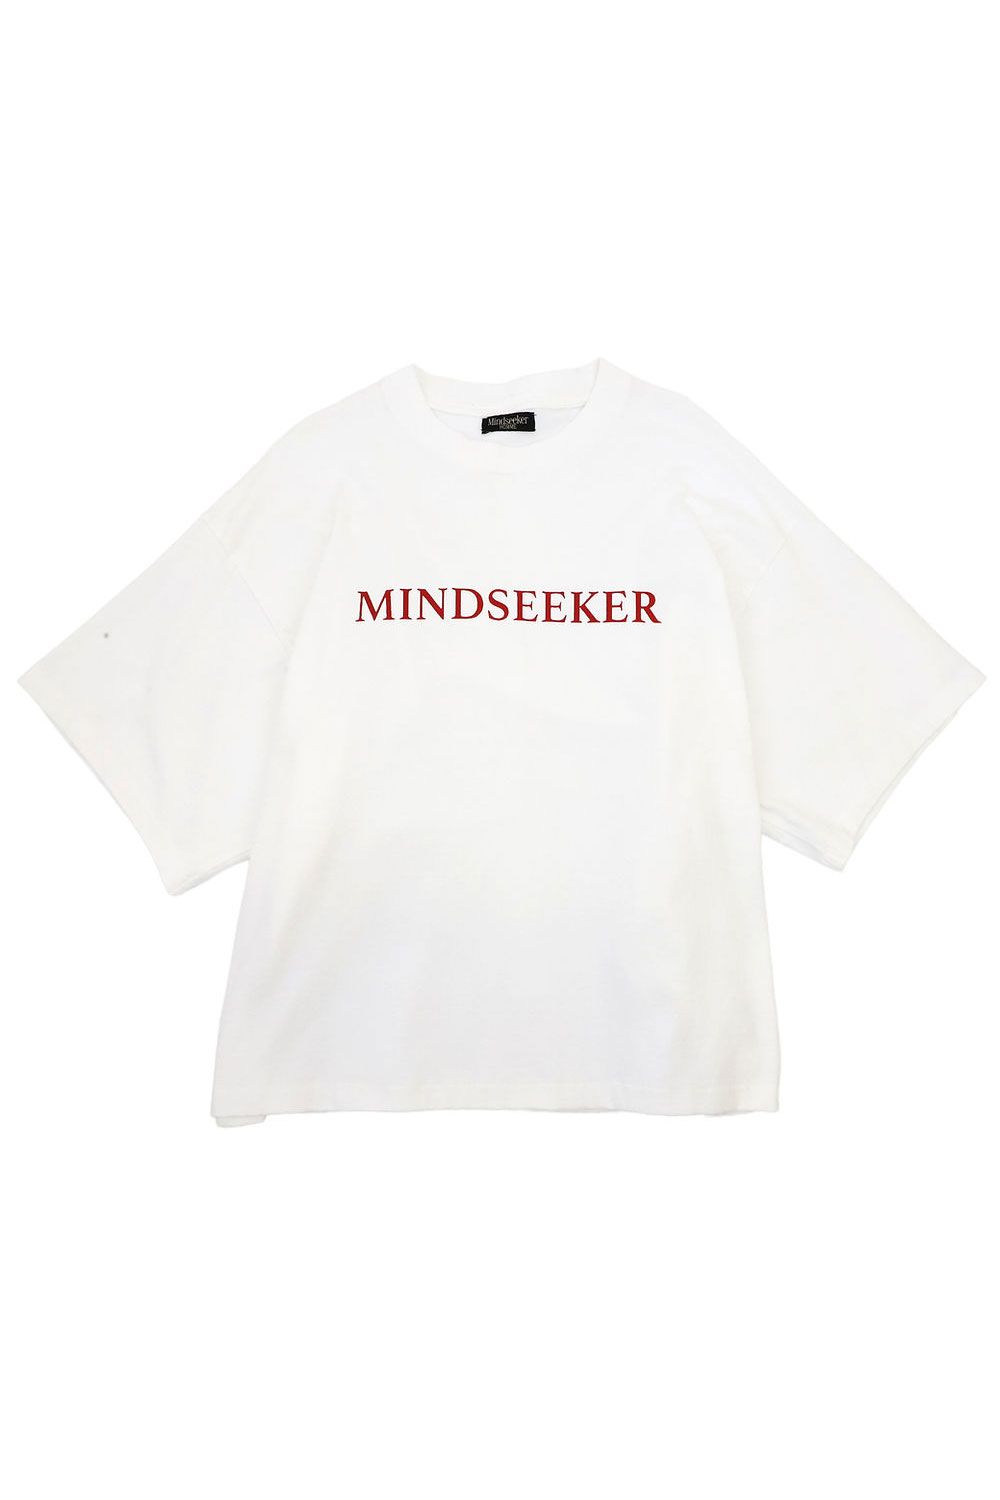 mindseeker - マインドシーカー | 正規オンライン通販《Tempt》